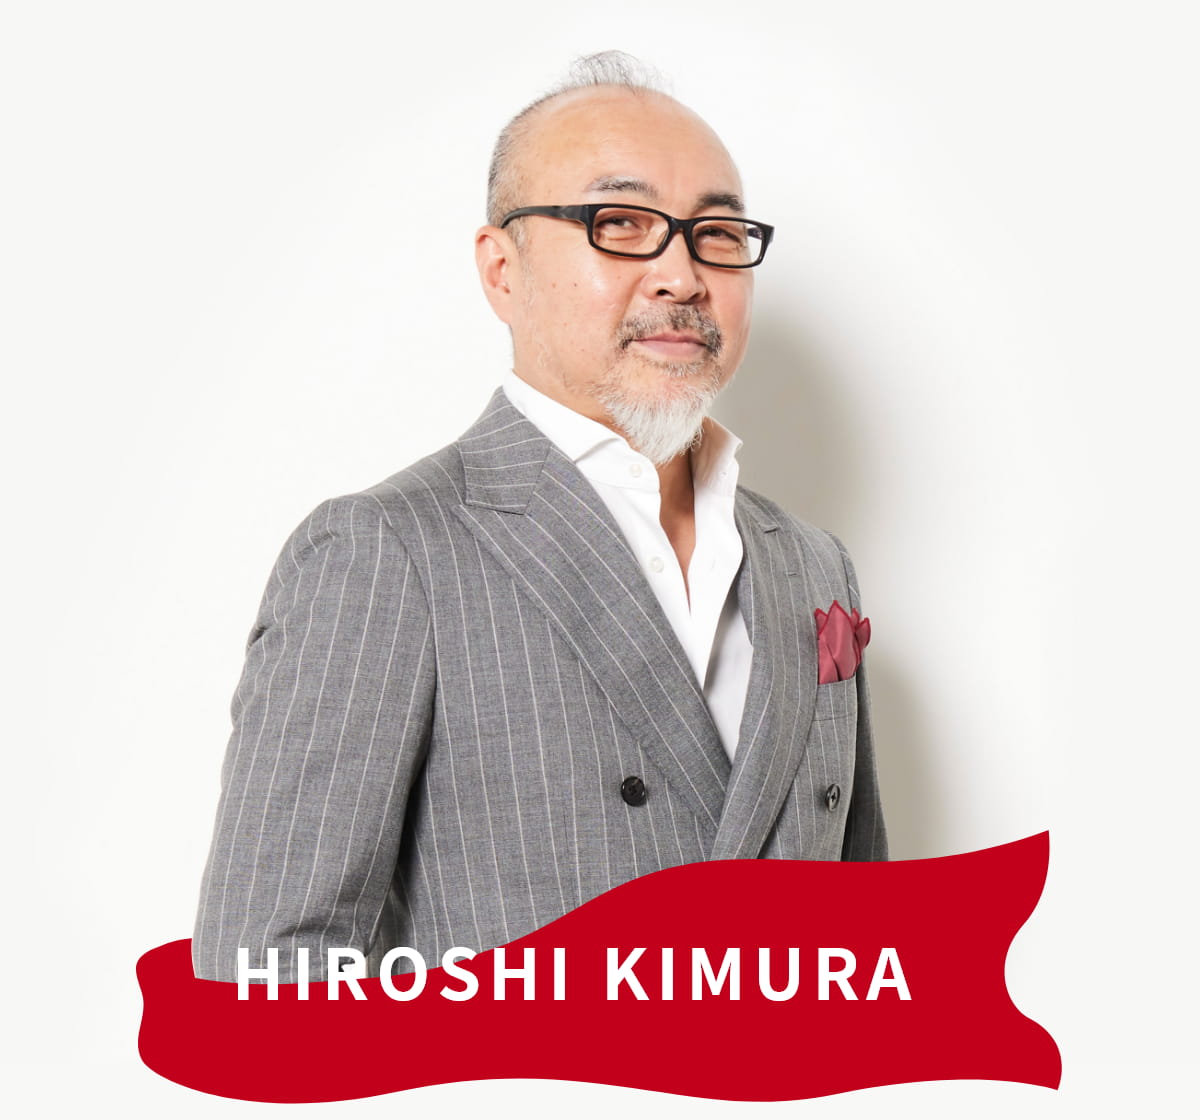 Hiroshi Kimura